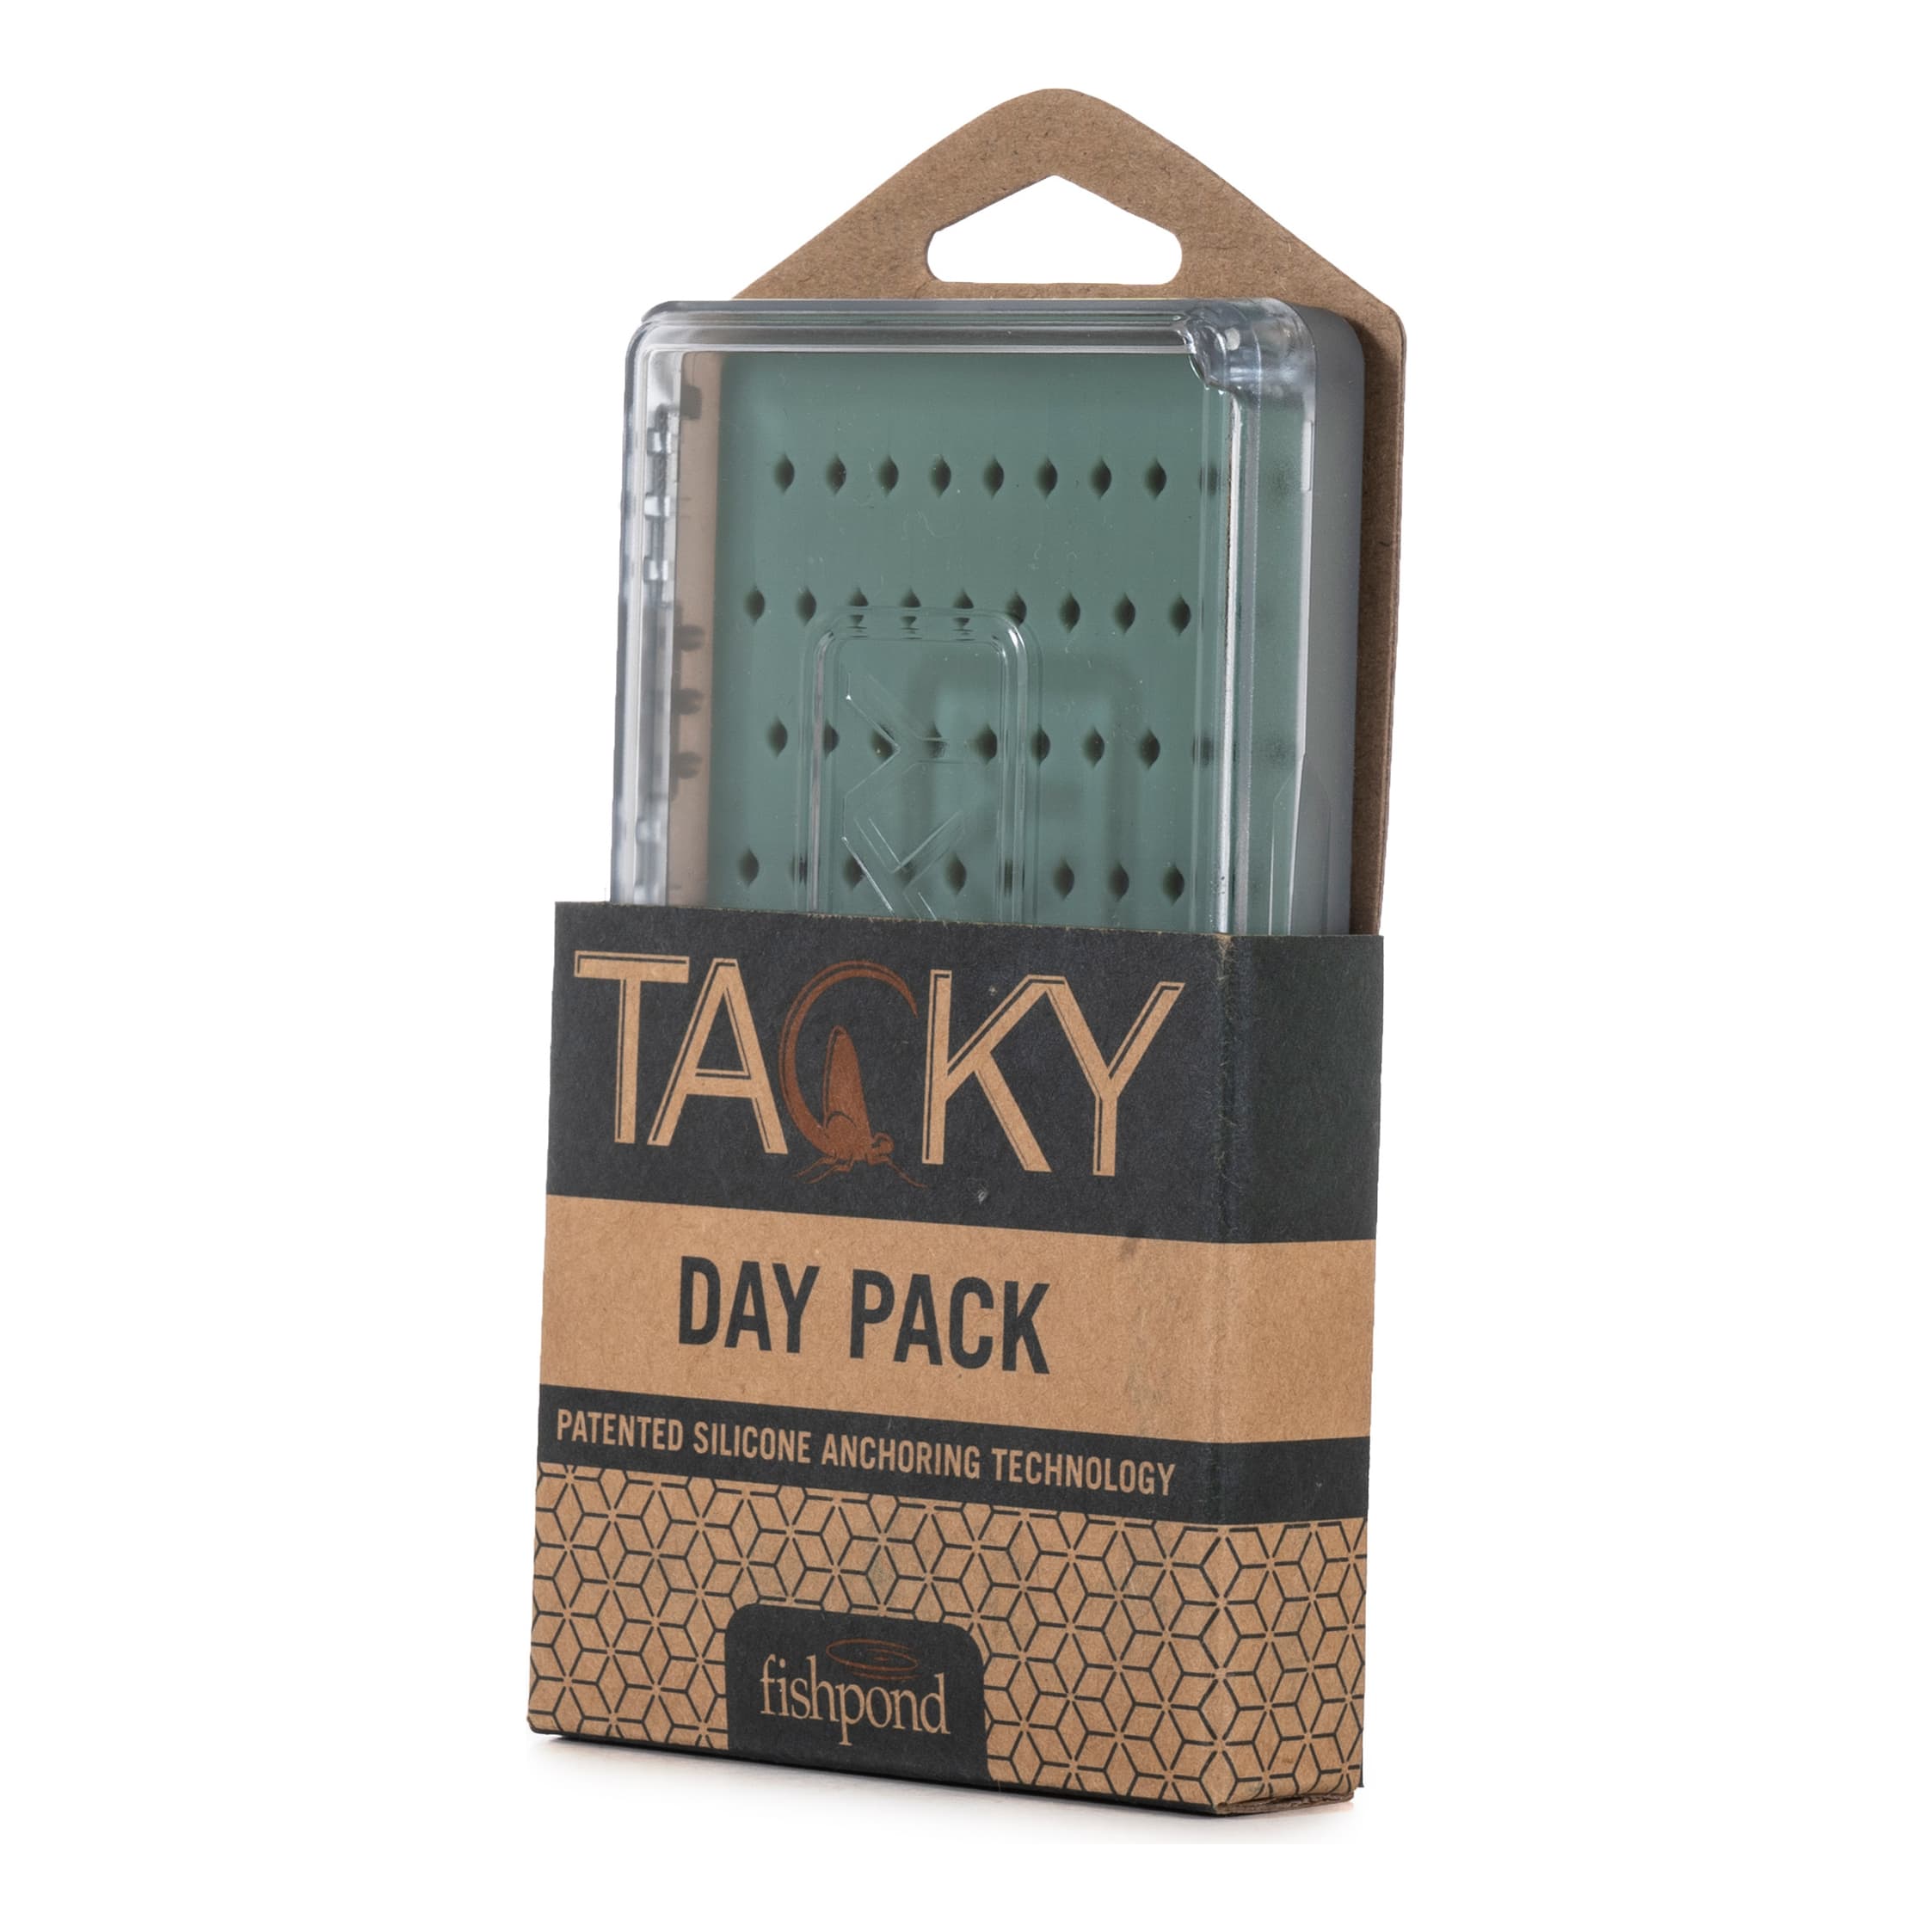 Tacky Daypack Fly Box